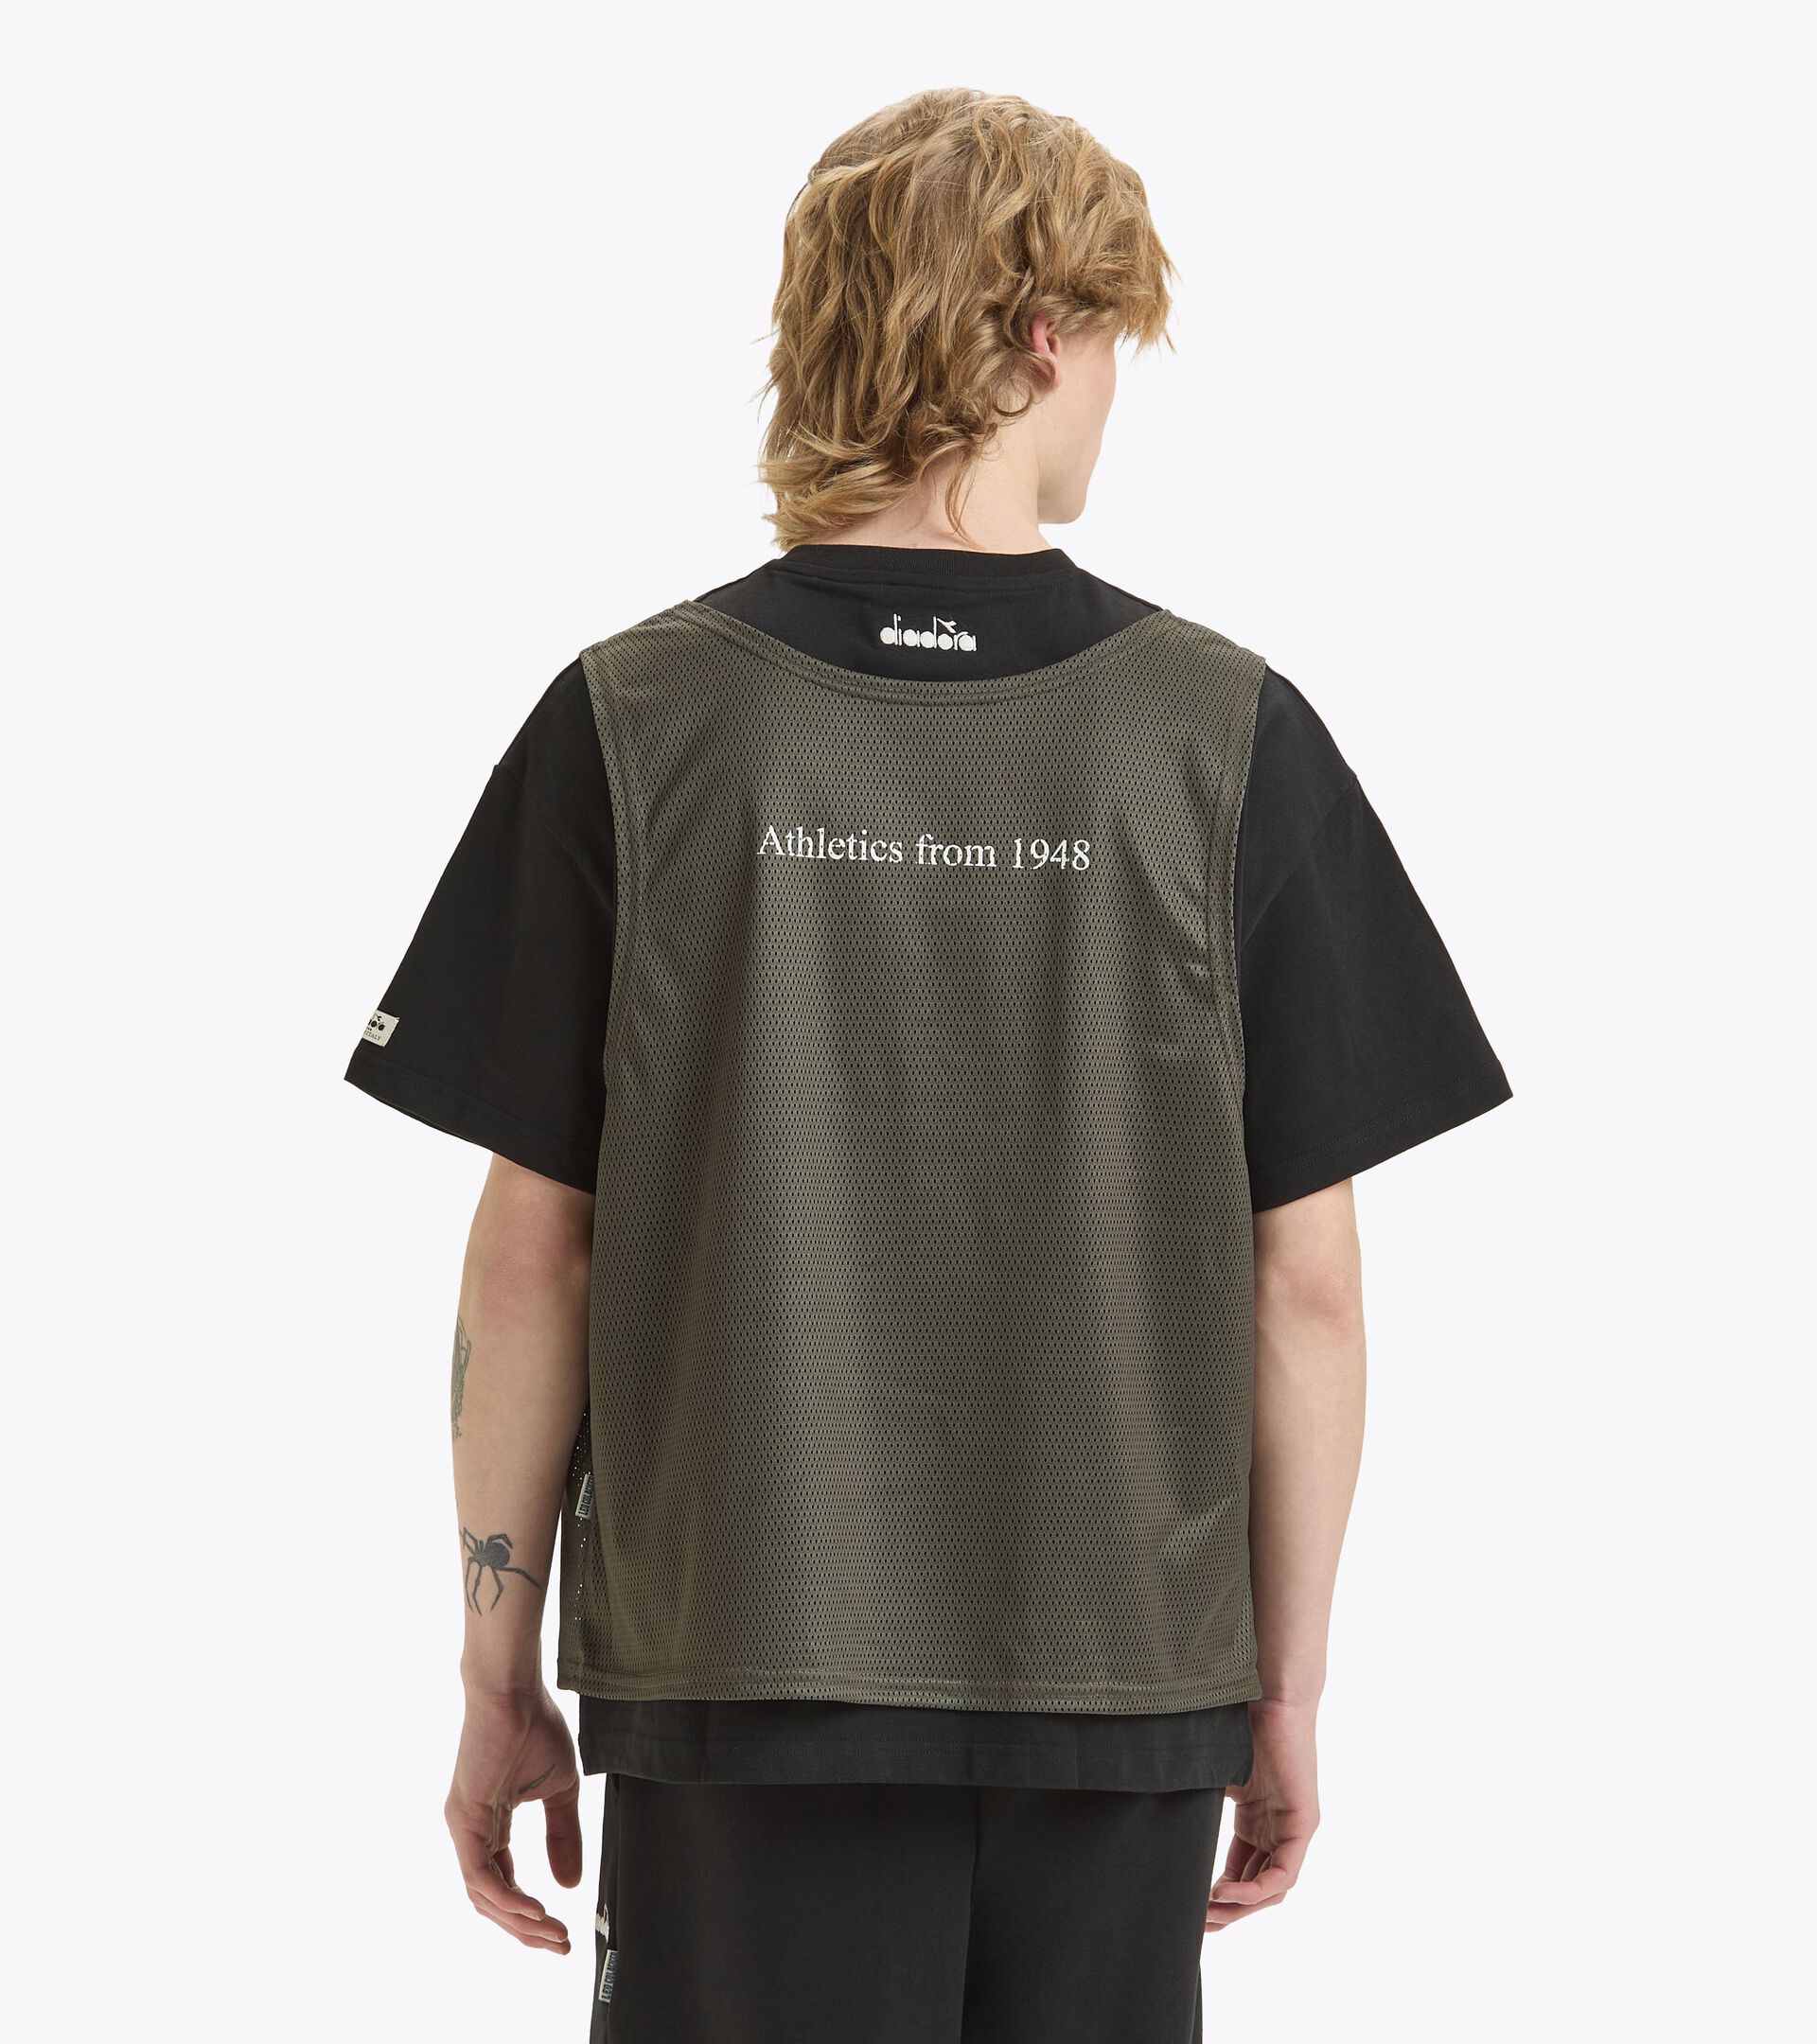 Camiseta y camiseta sin mangas 2 en 1 - Made in Italy - Gender neutral
 T-SHIRT SS 2-IN-1 LEGACY OLIVA MILITAR - Diadora